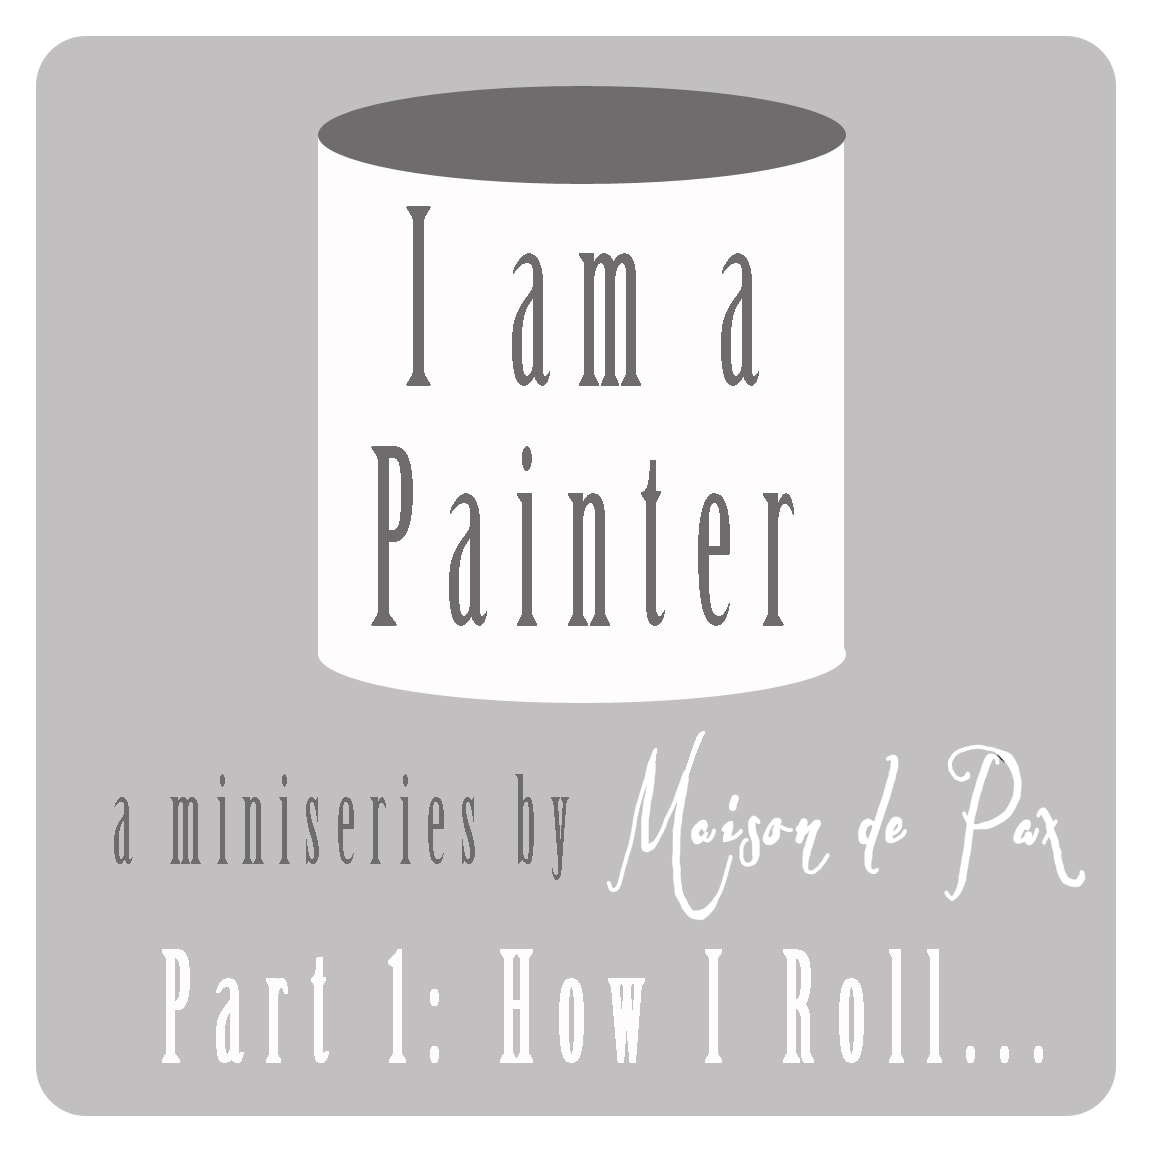 I am a Painter: how I roll…